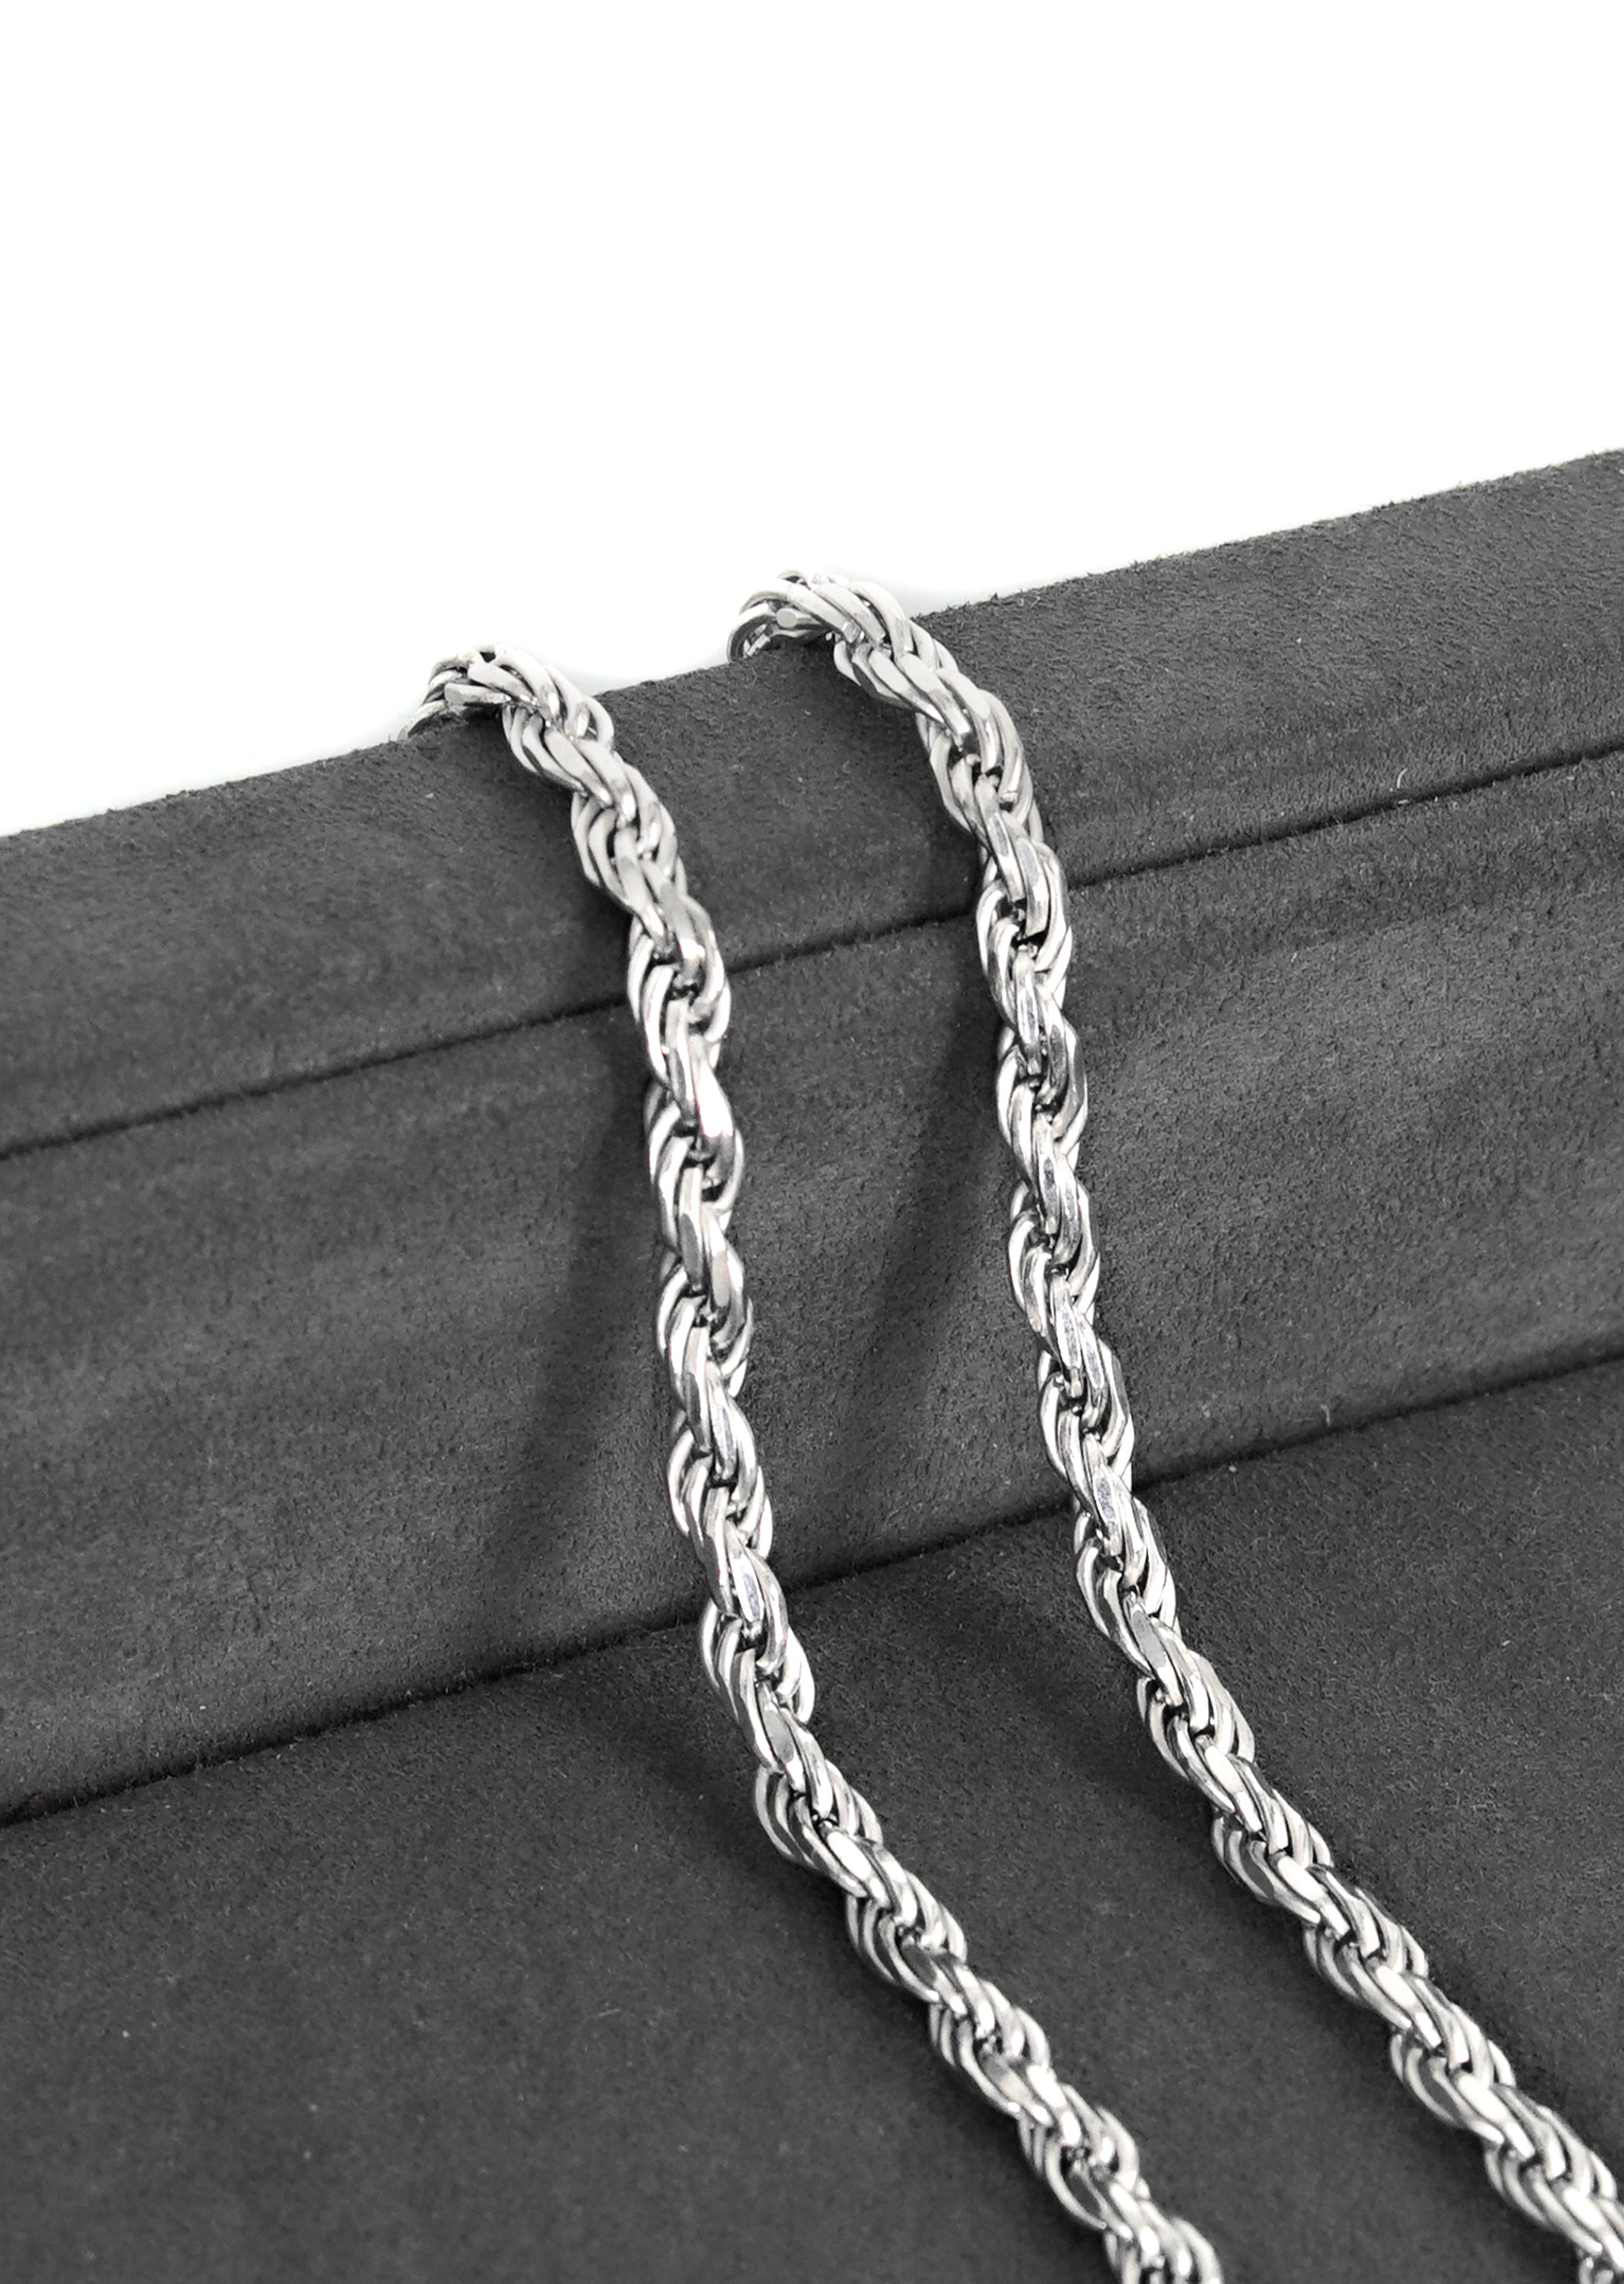 Silver Chain - Mens White Chain / Rope Chain / 3.5 MM